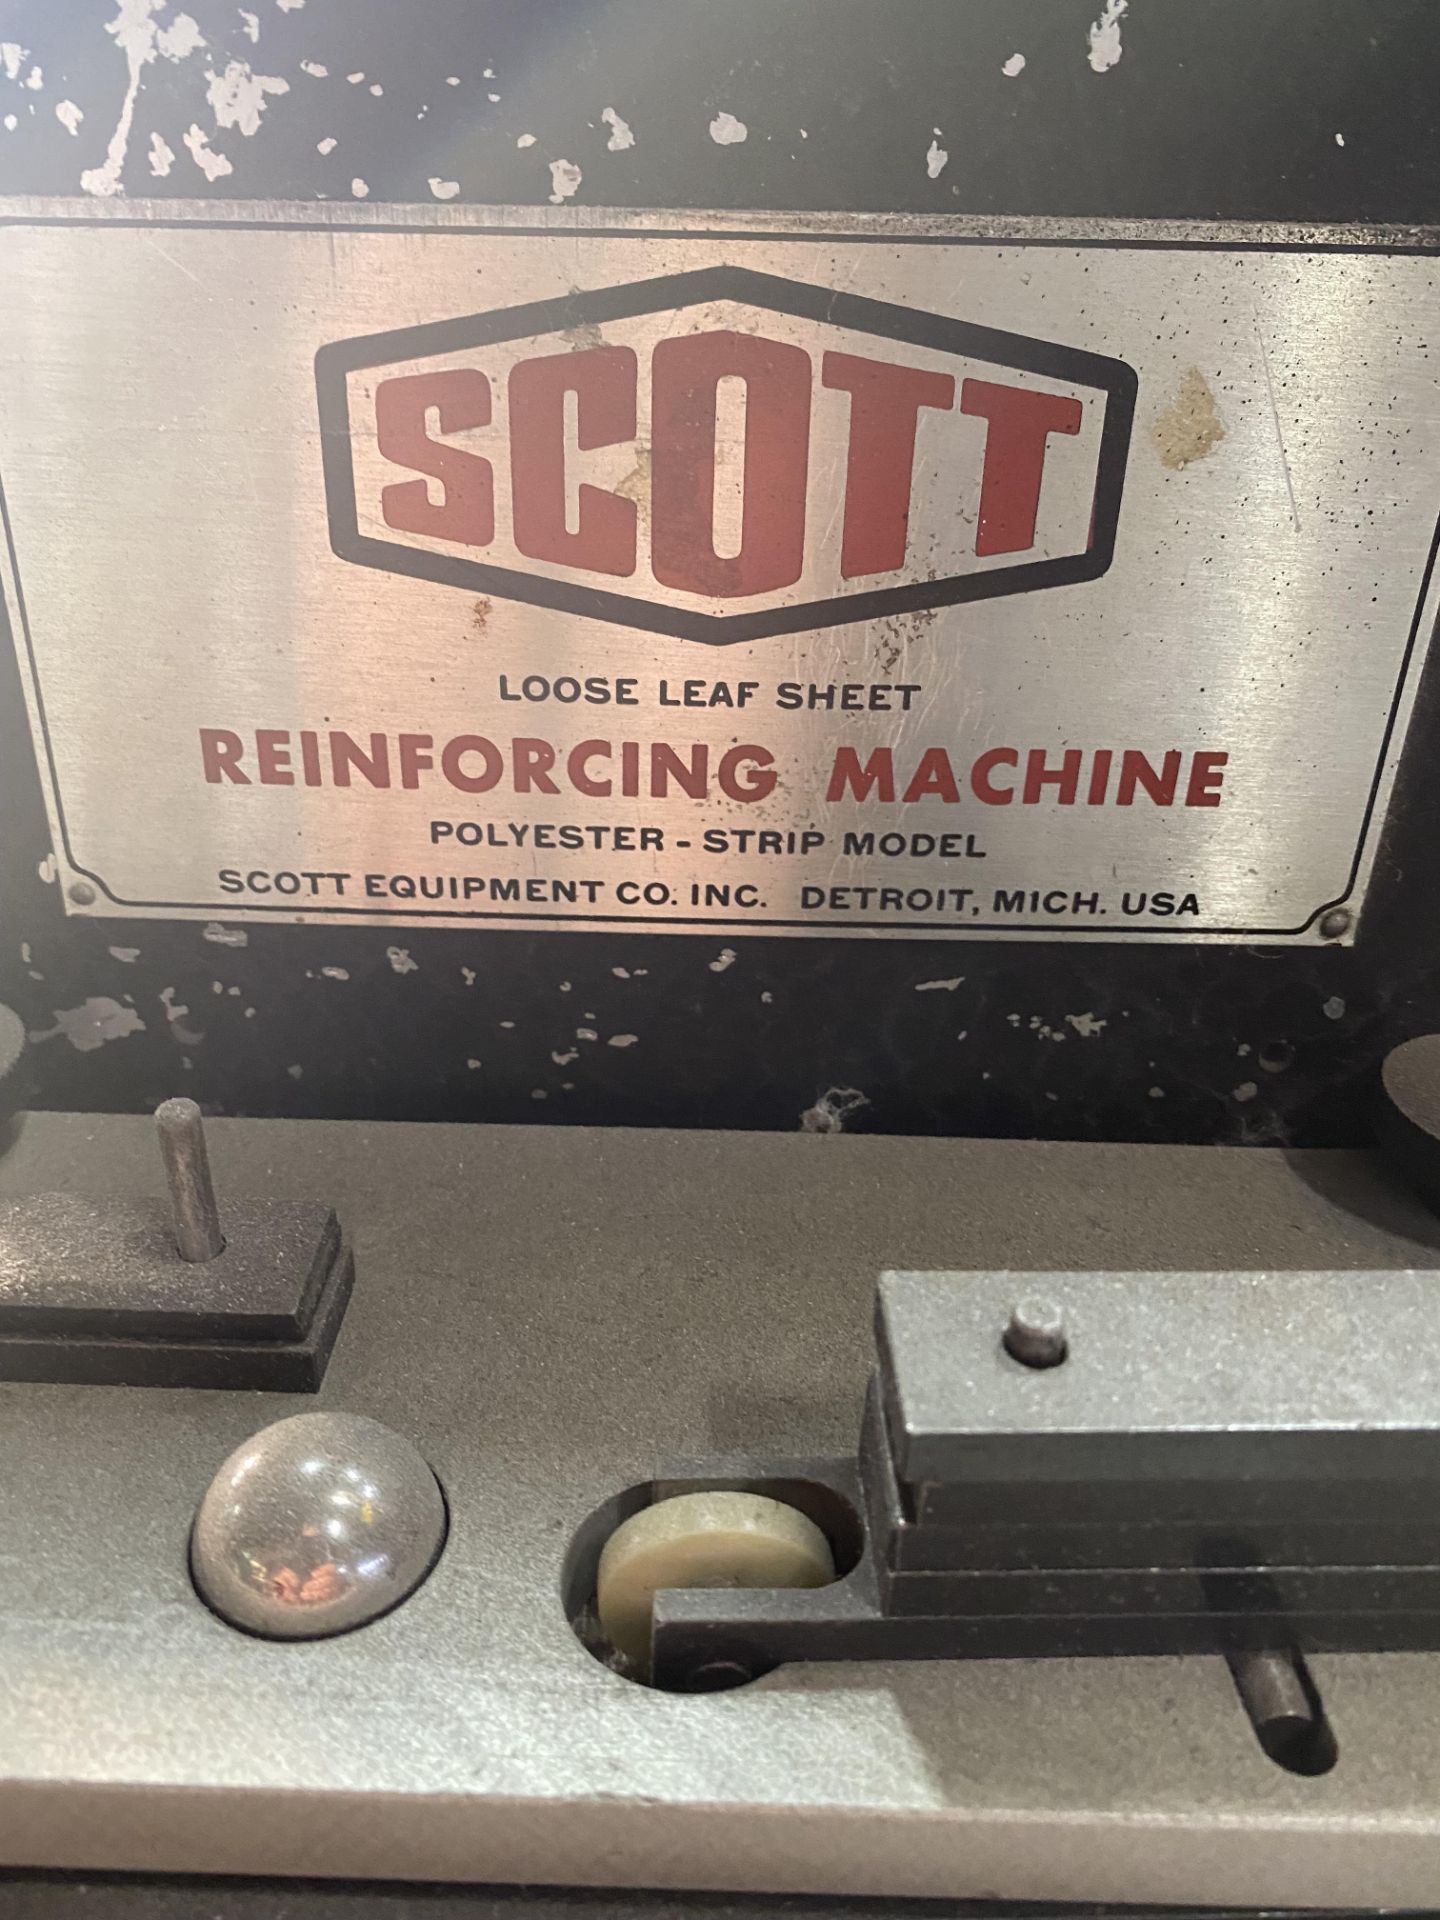 Scott Loose Leaf Sheet Reinforcing Machine s/n 9P-02036 - Image 2 of 5